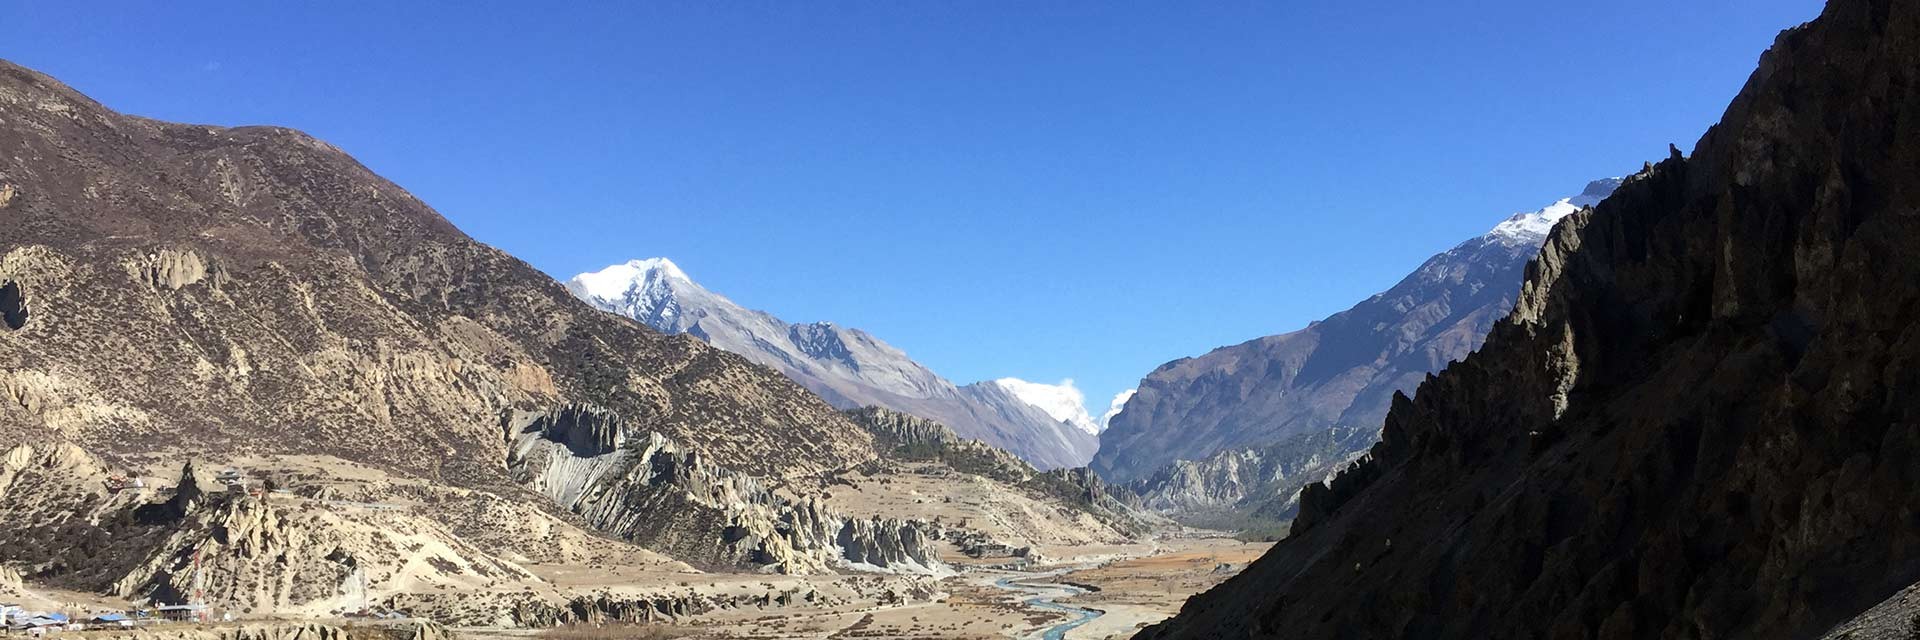 Annapurna Circuit Trek with Nar Phi Valley